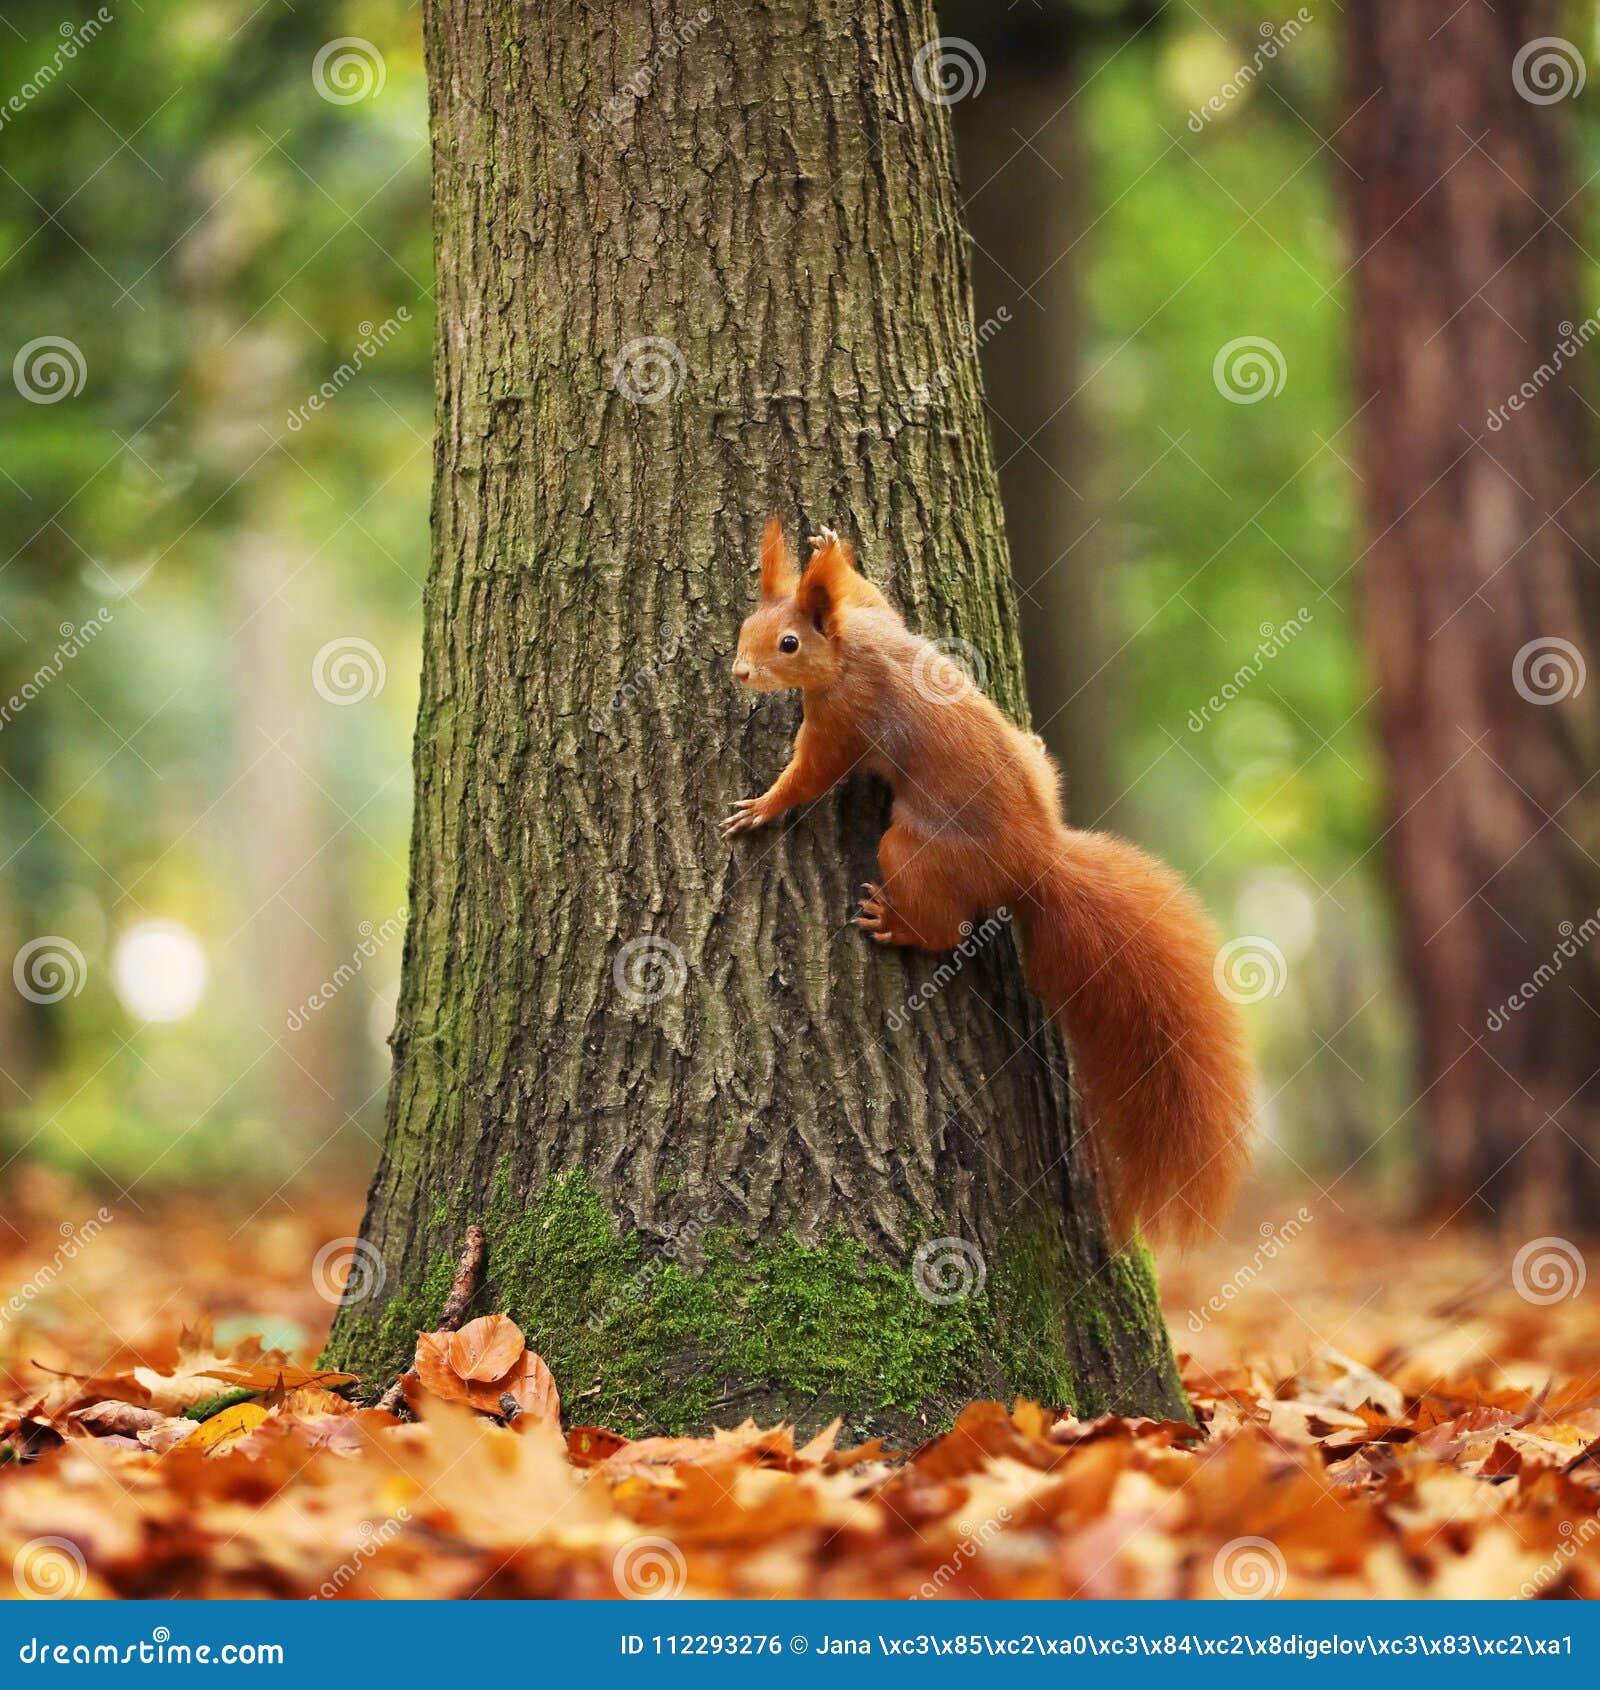 File:Red Squirrel - Lazienki.JPG - Wikimedia Commons